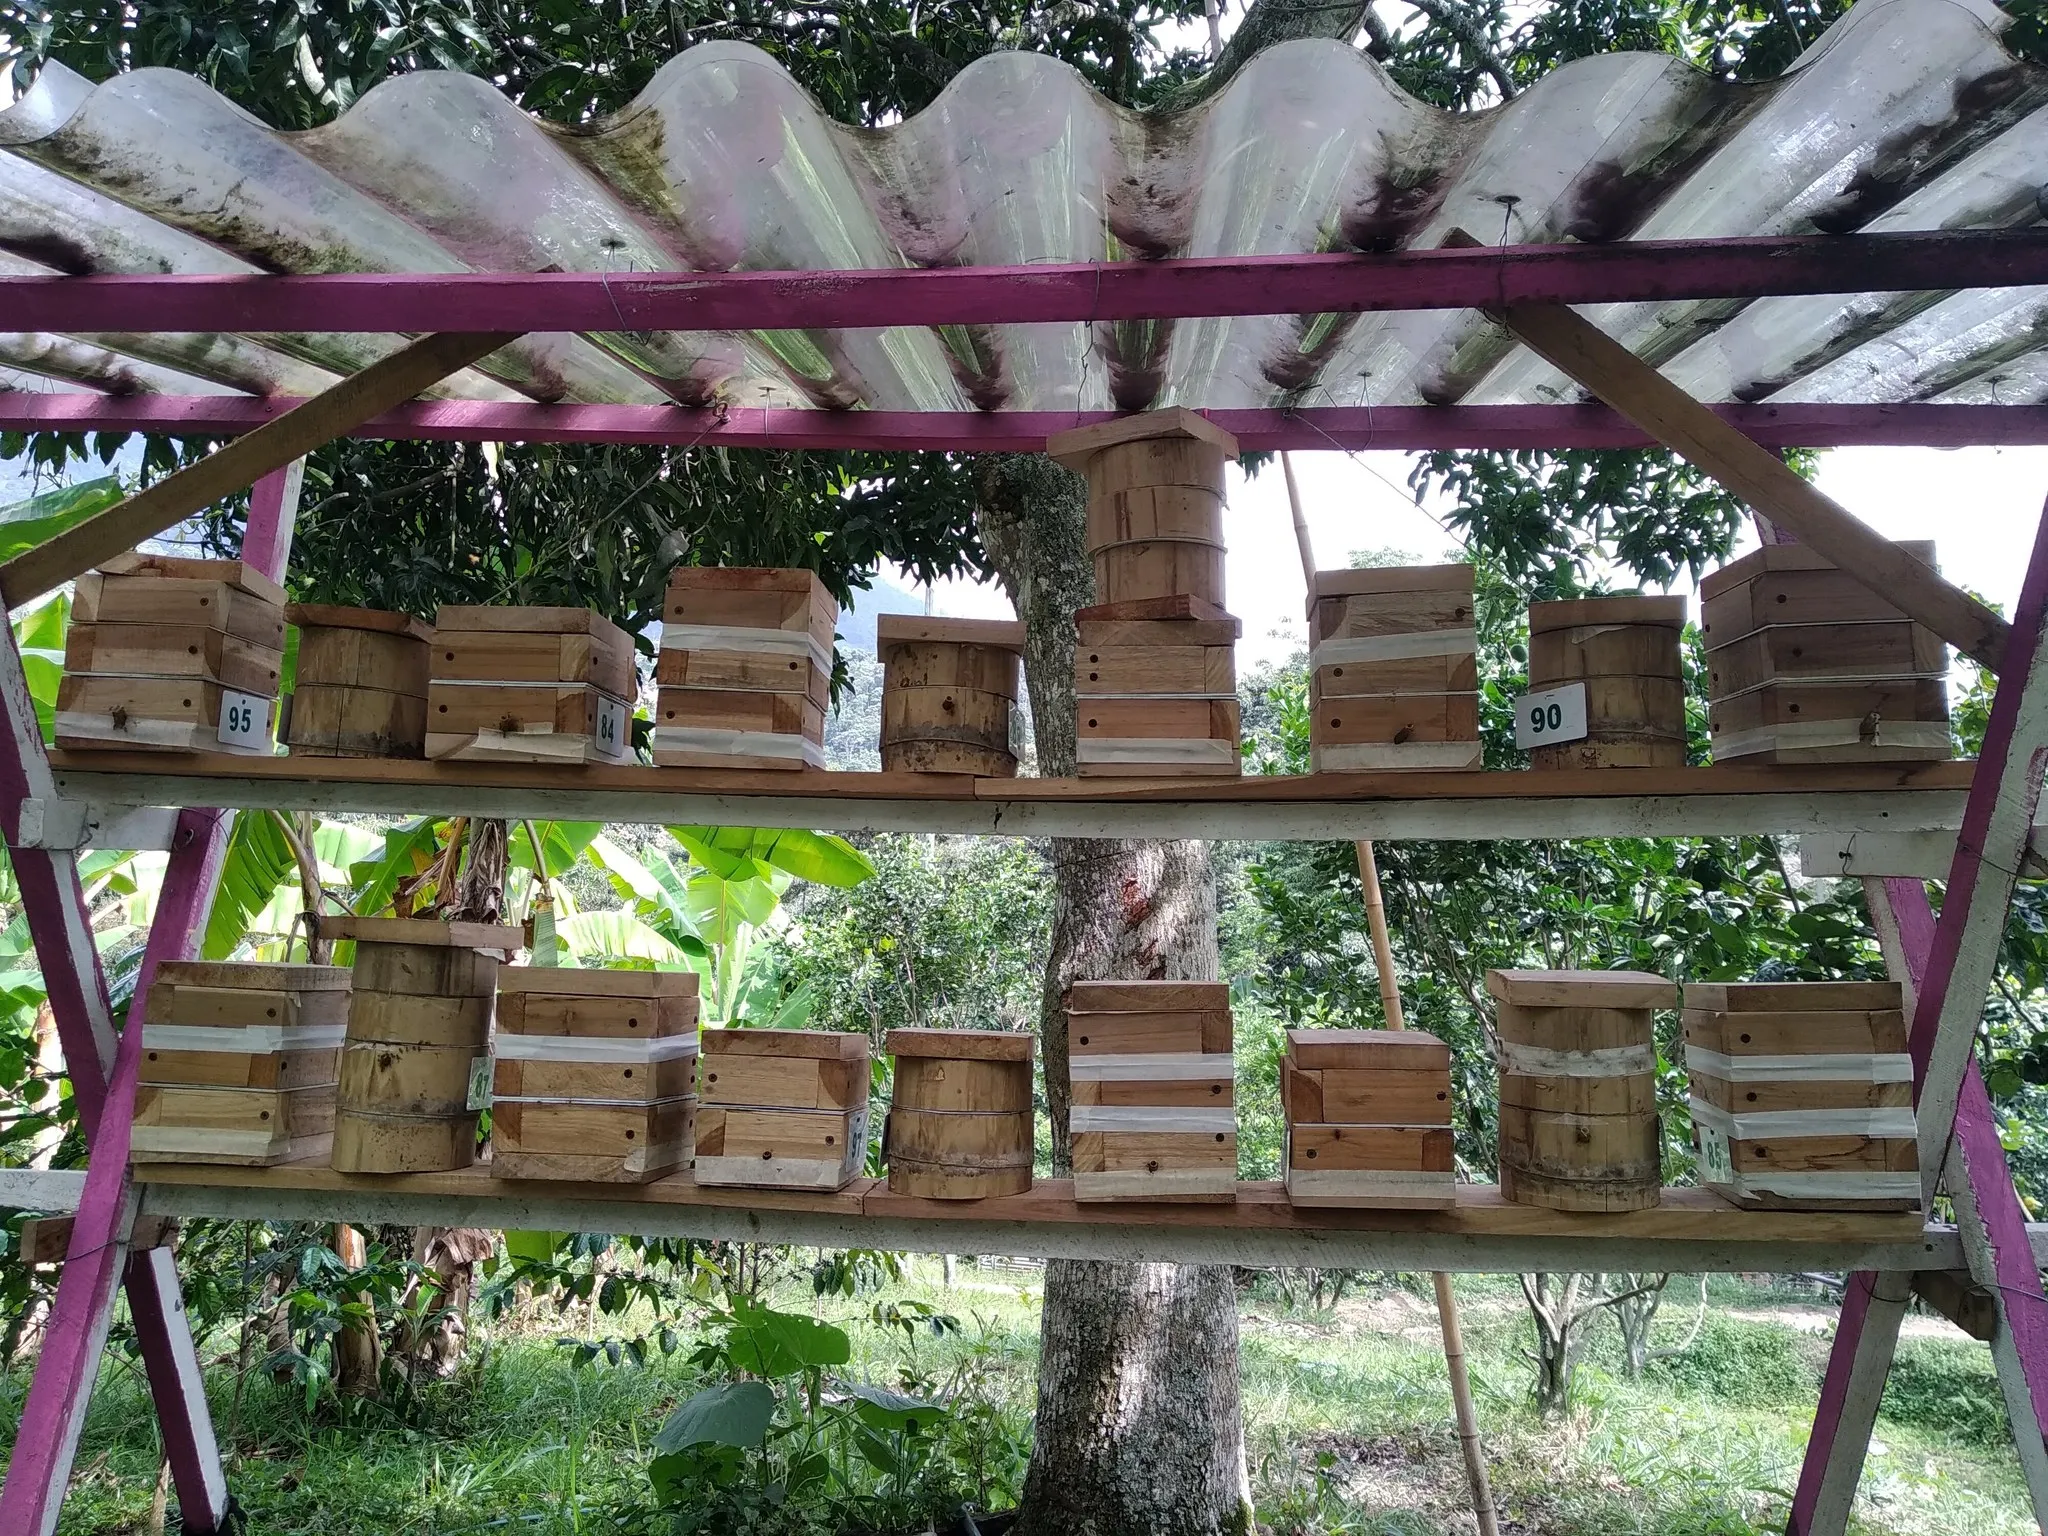 Proyecto de meliponicultura responsable (8 colmenas)